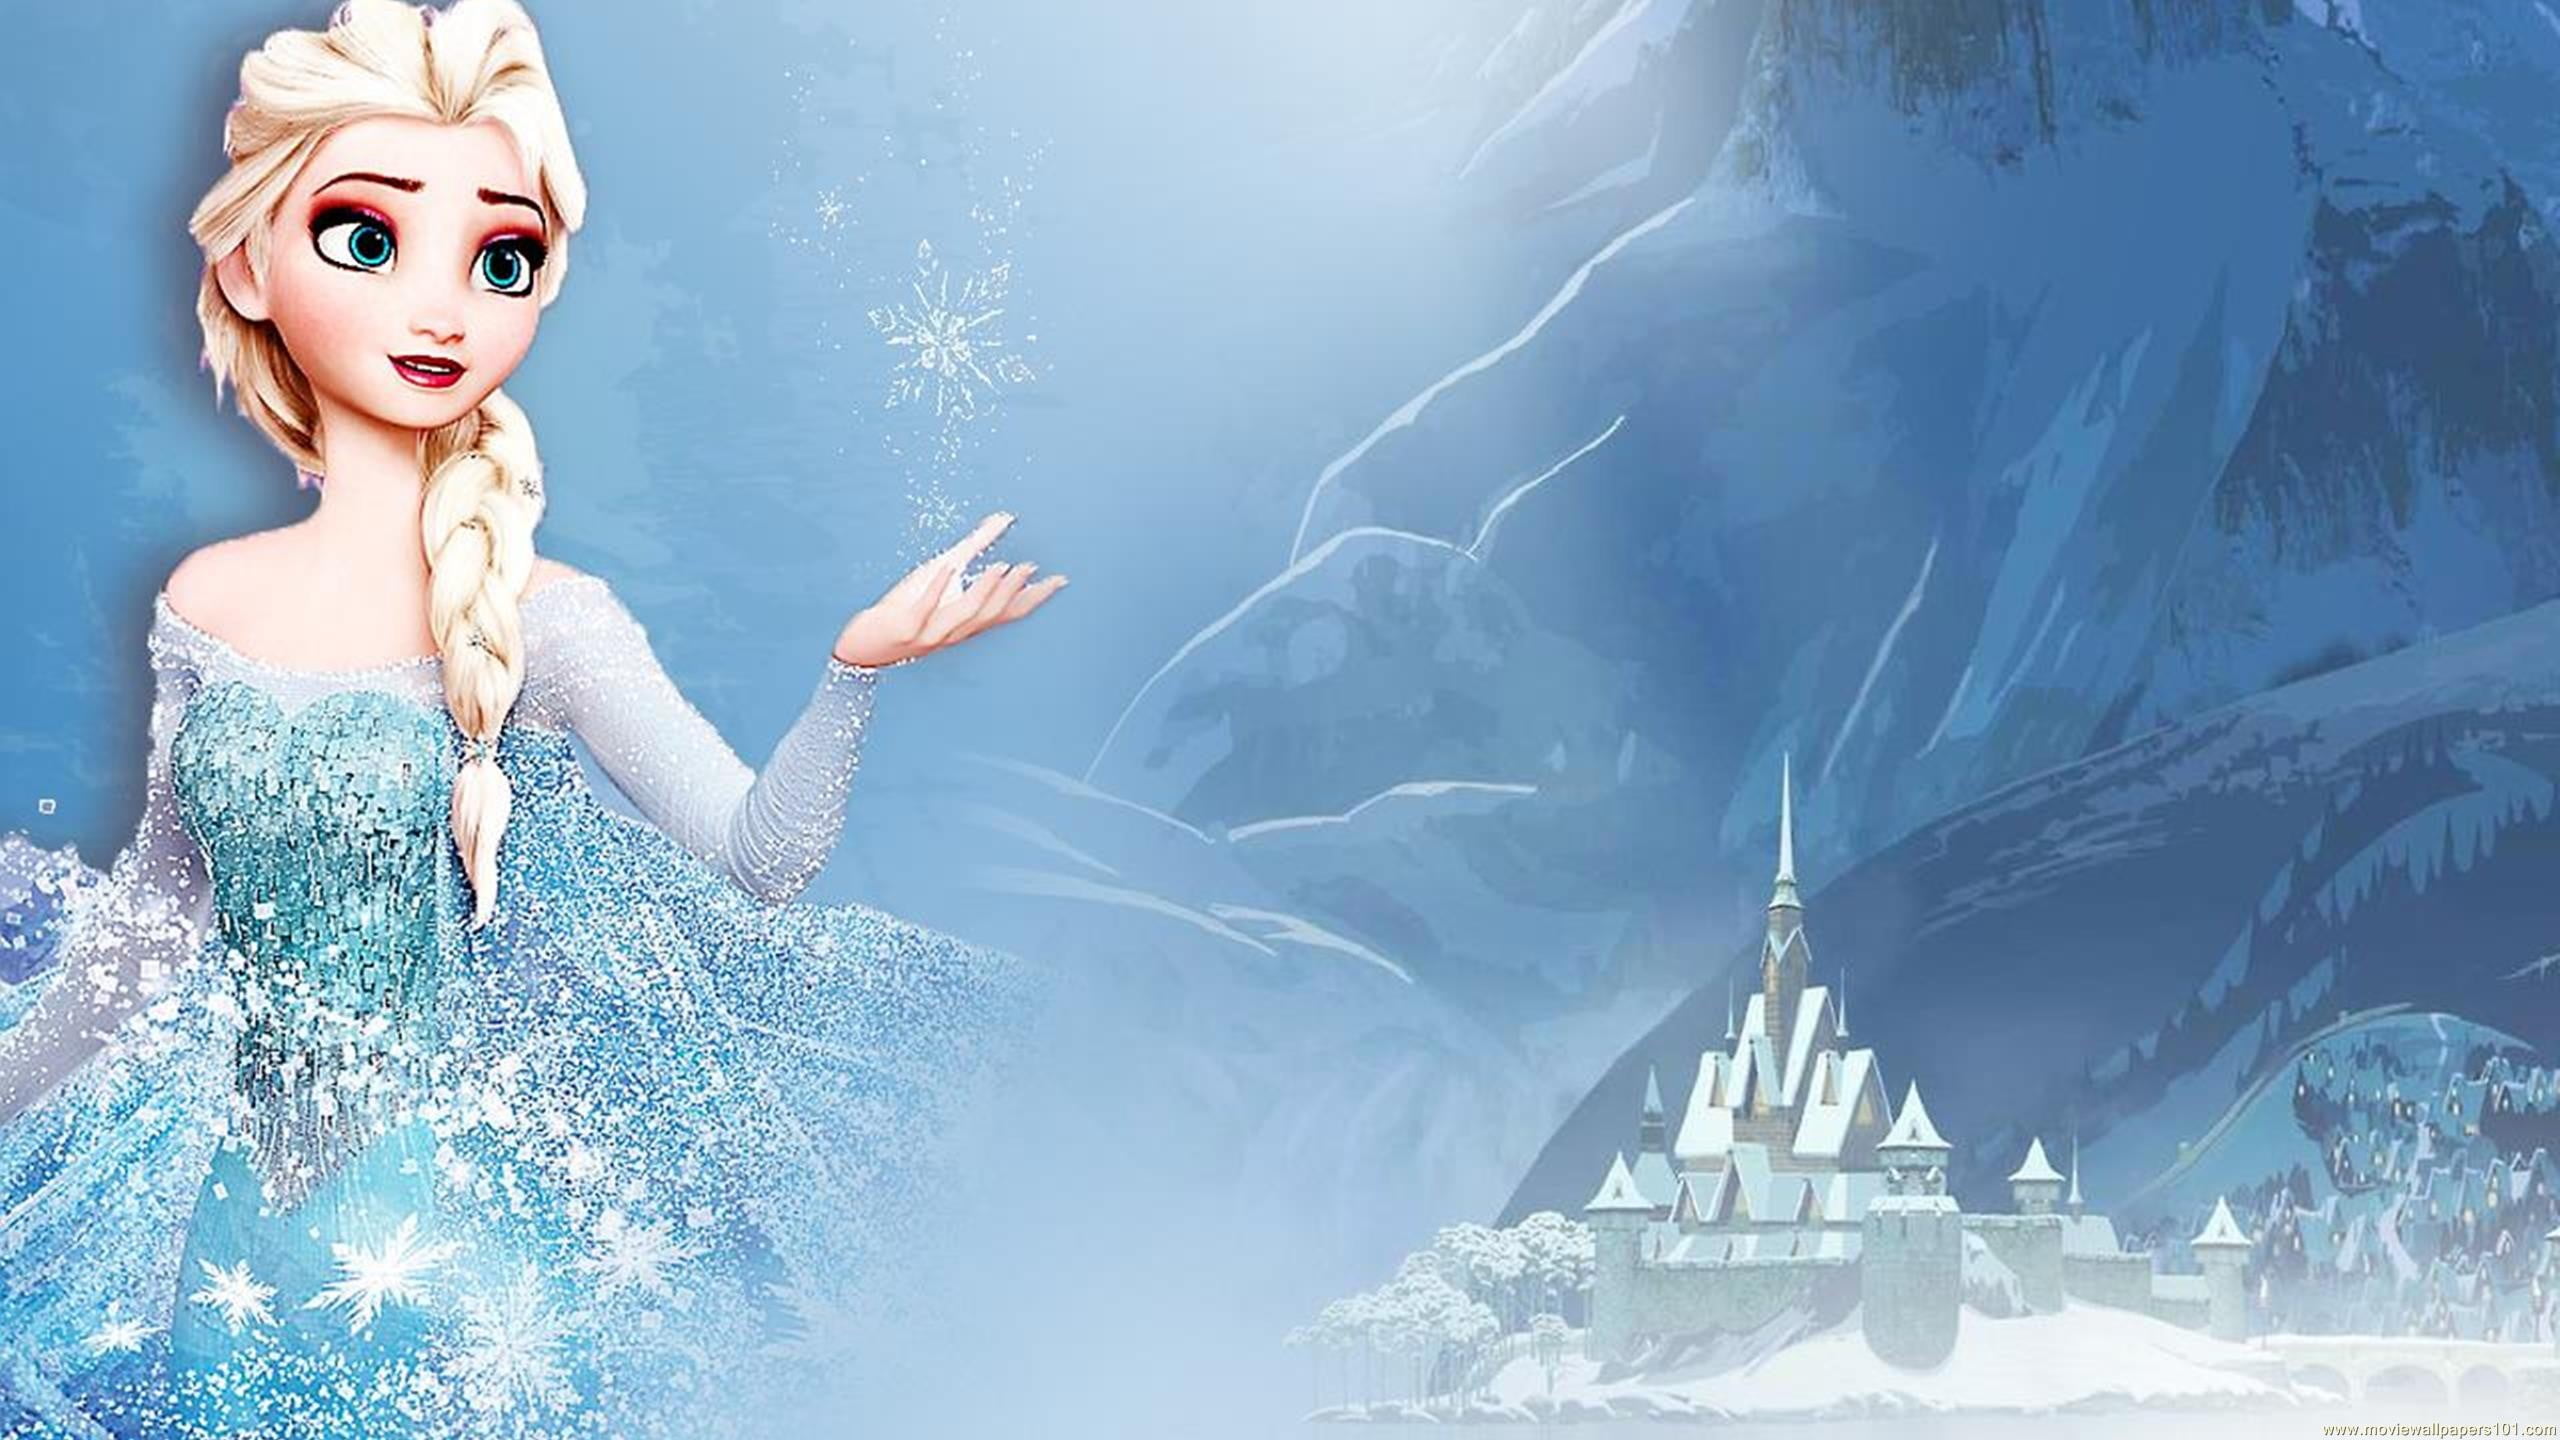 Elsa illustration, Princess Elsa, Frozen (movie), movies, animated movies